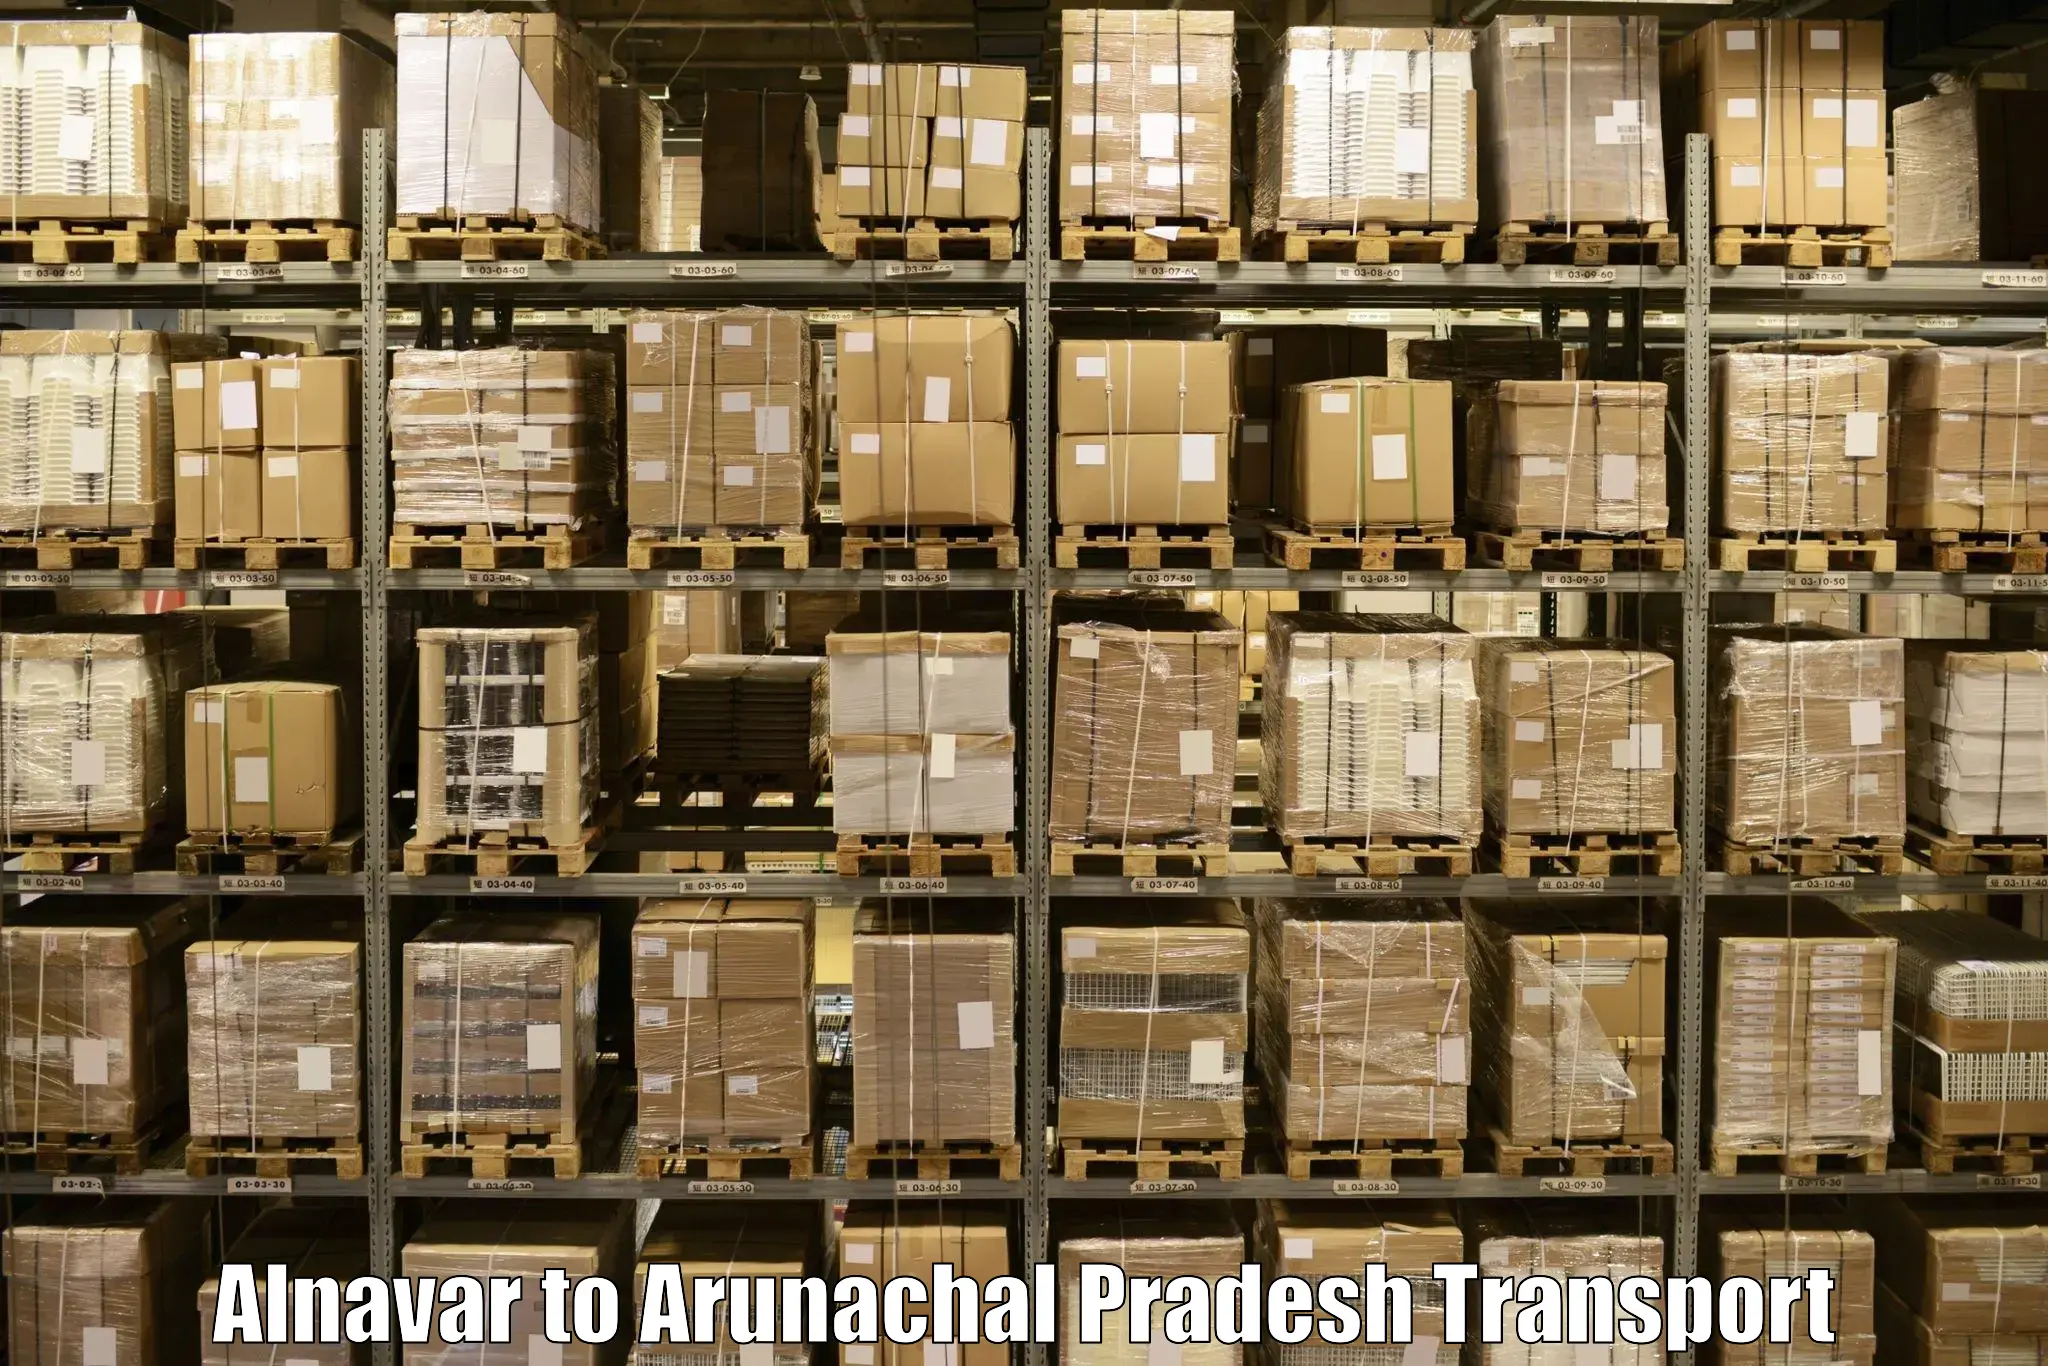 Delivery service Alnavar to Pasighat